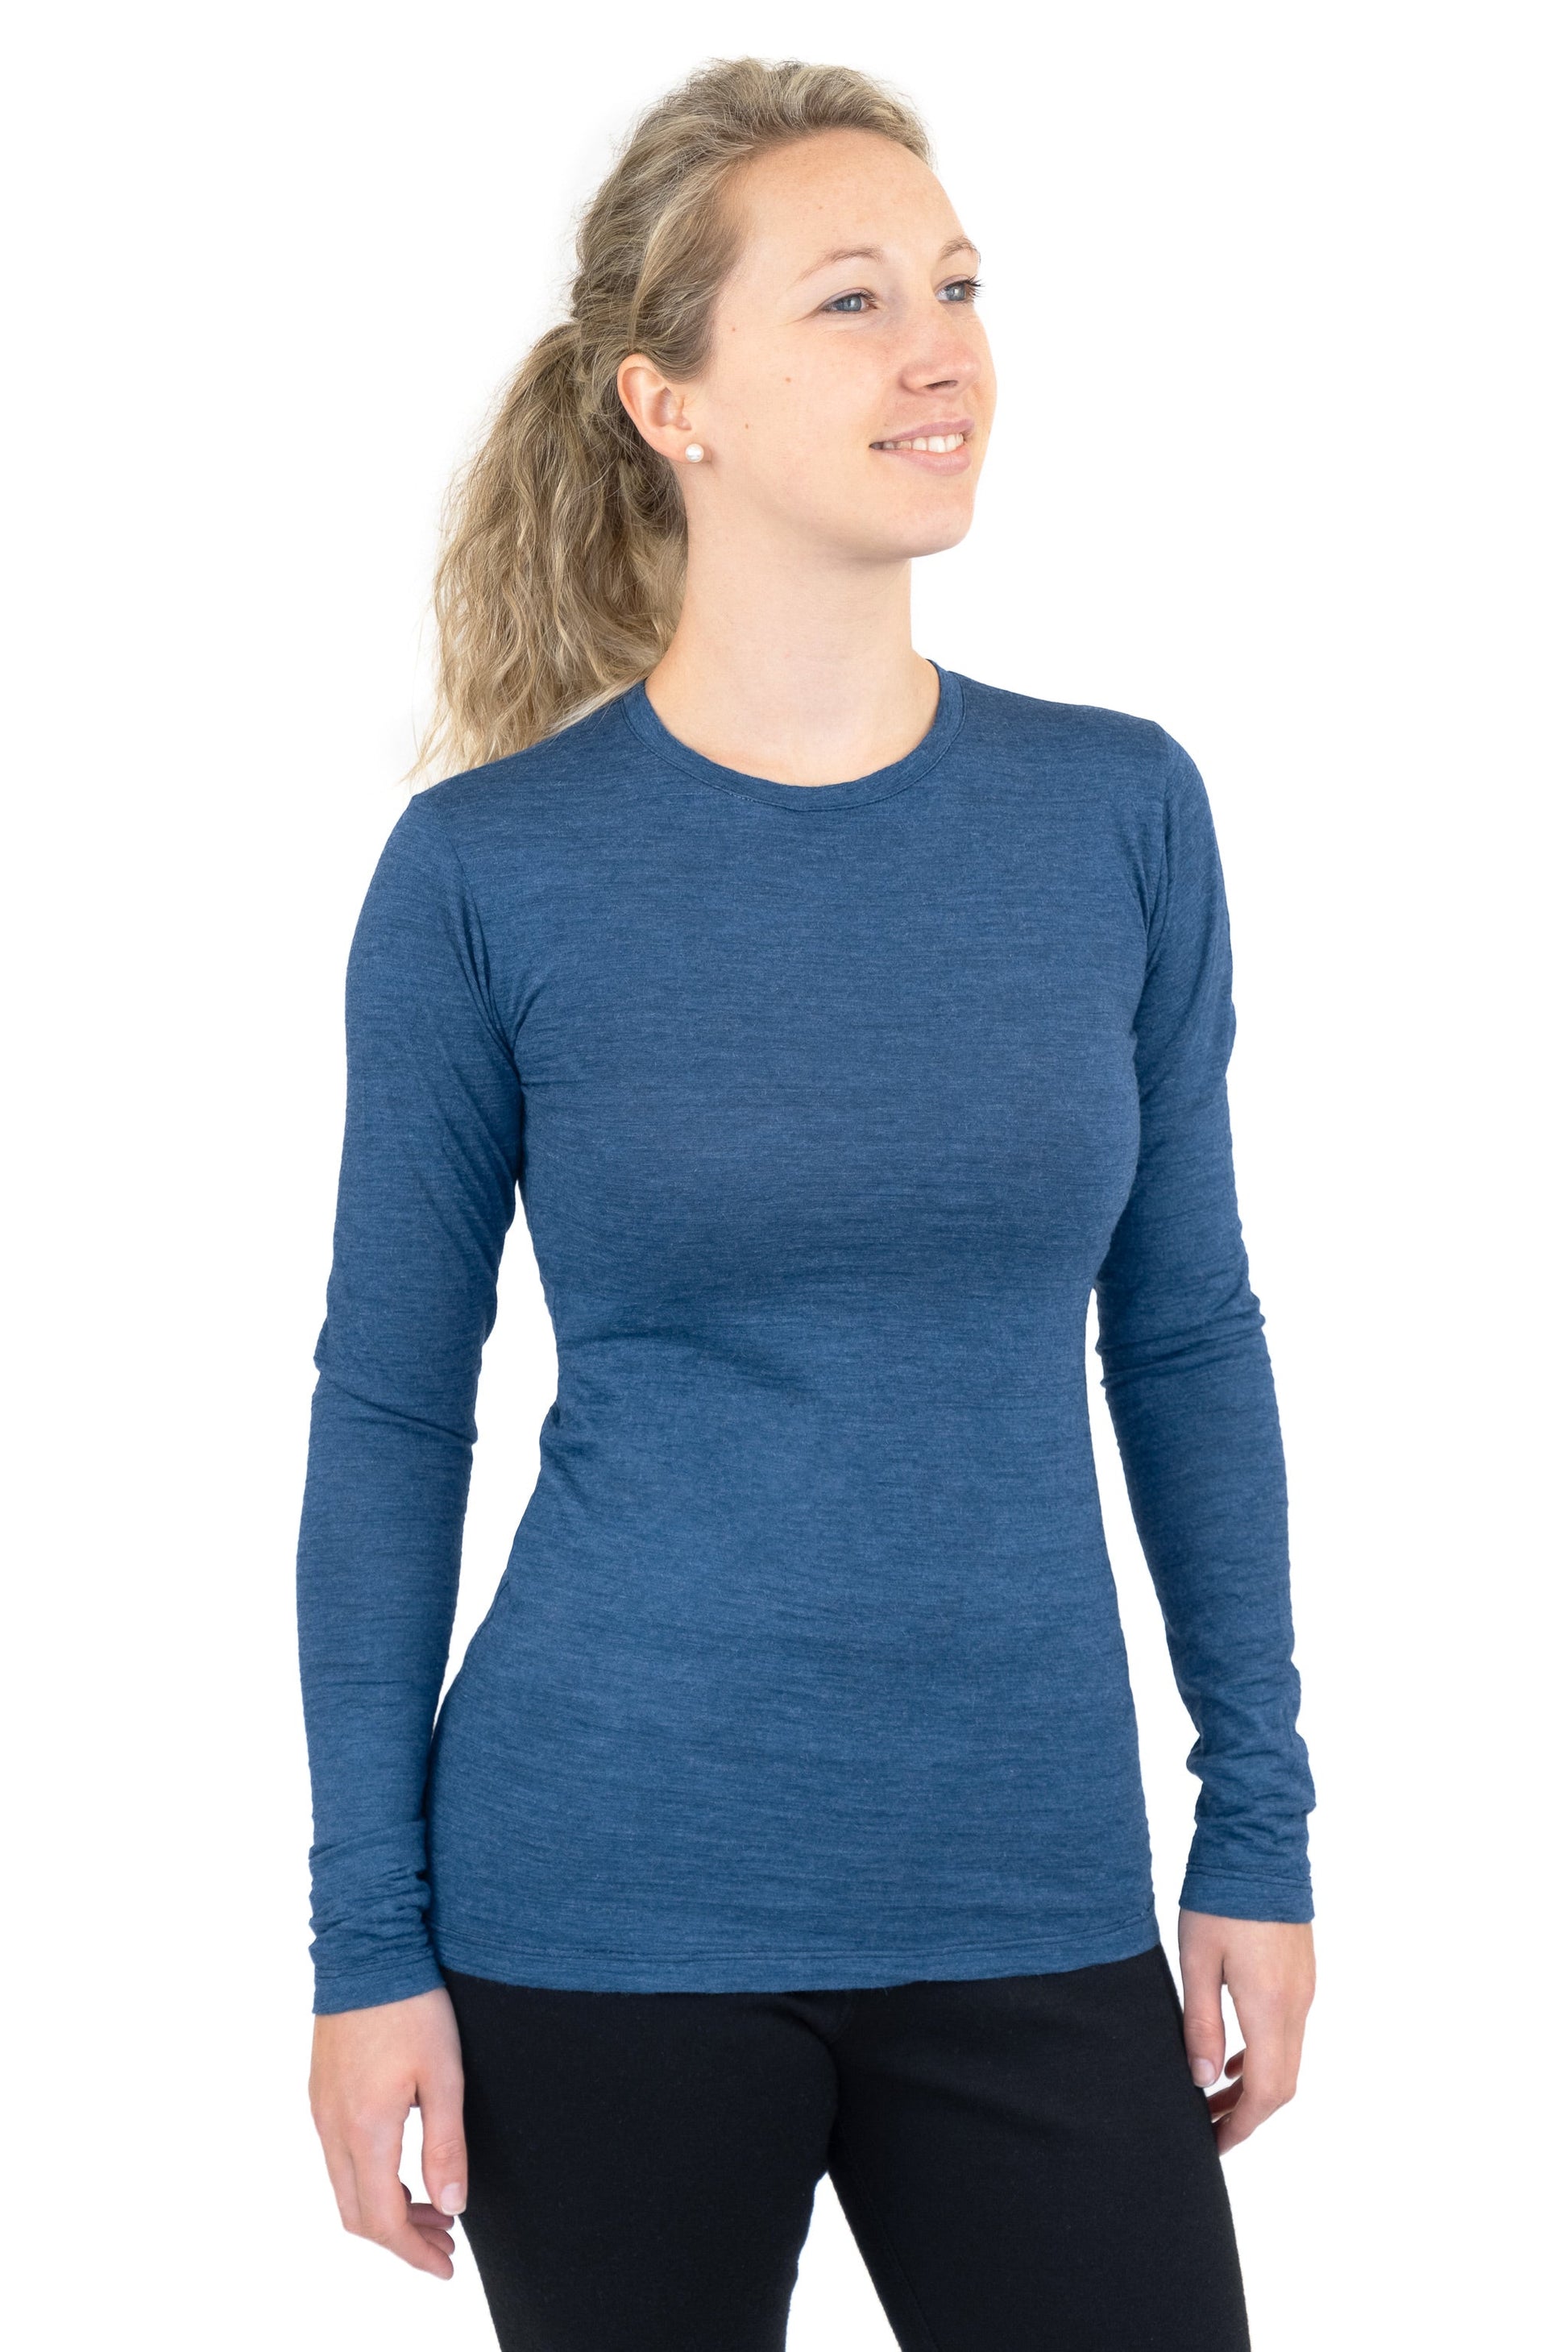 Women's Alpaca Wool Long Sleeve Base Layer: 110 Ultralight color Natural Blue